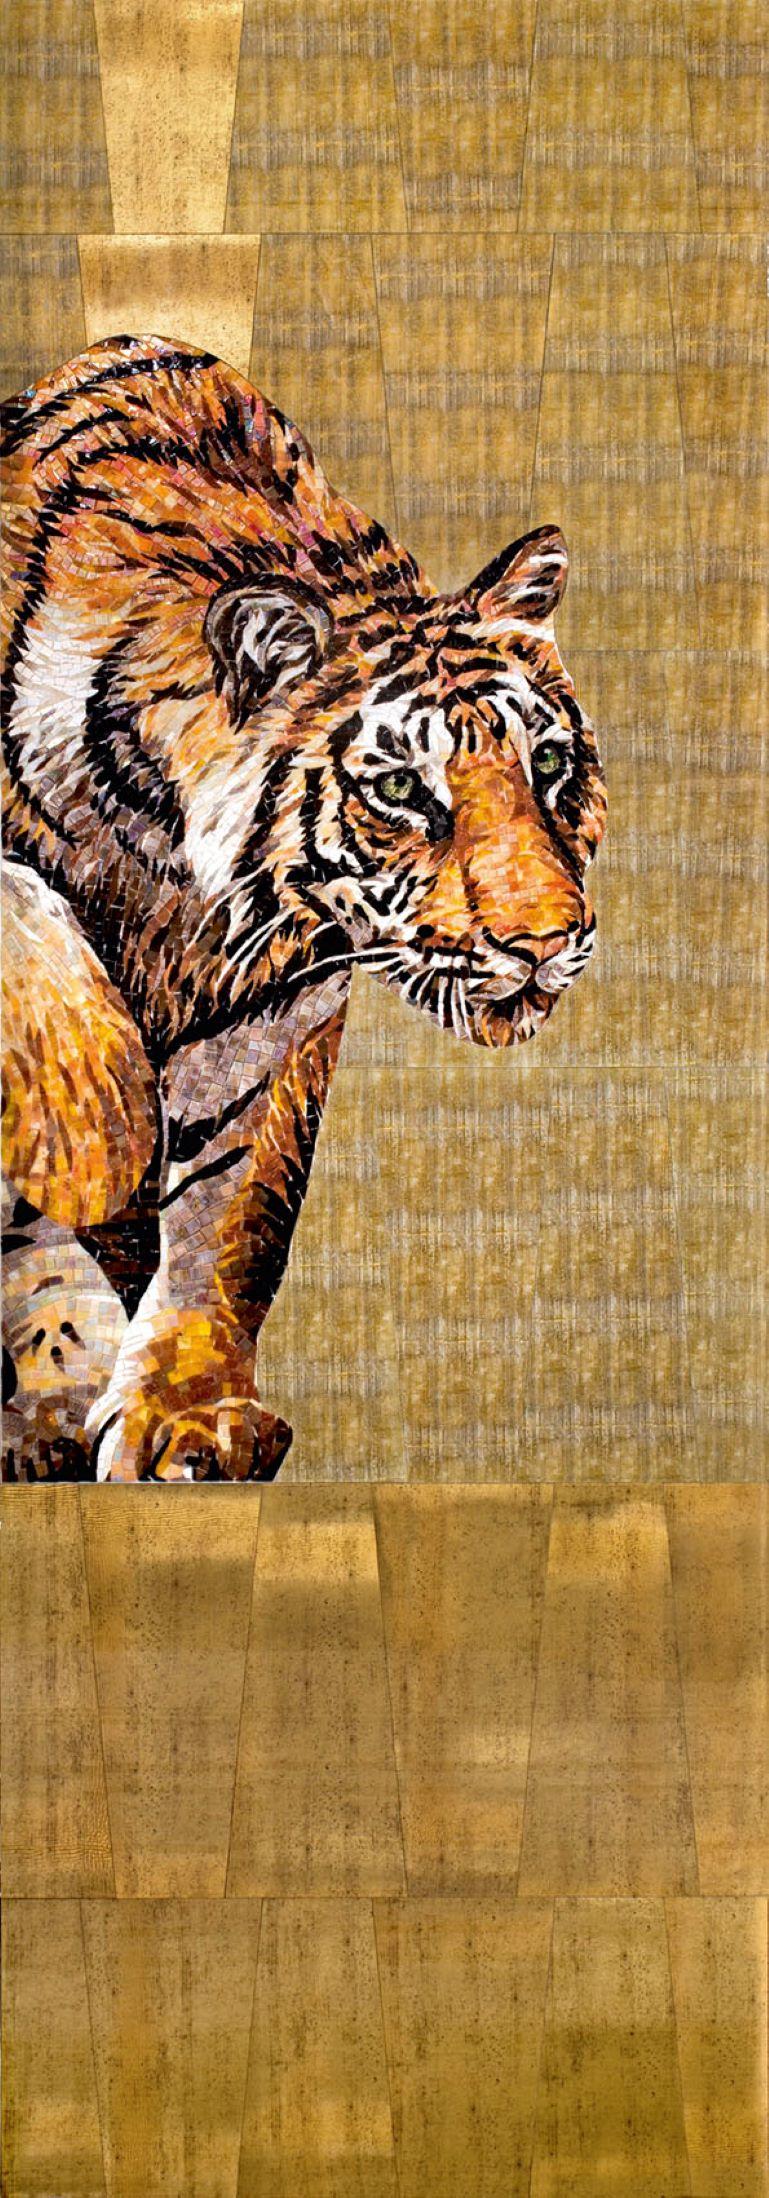 tiger mosaic art